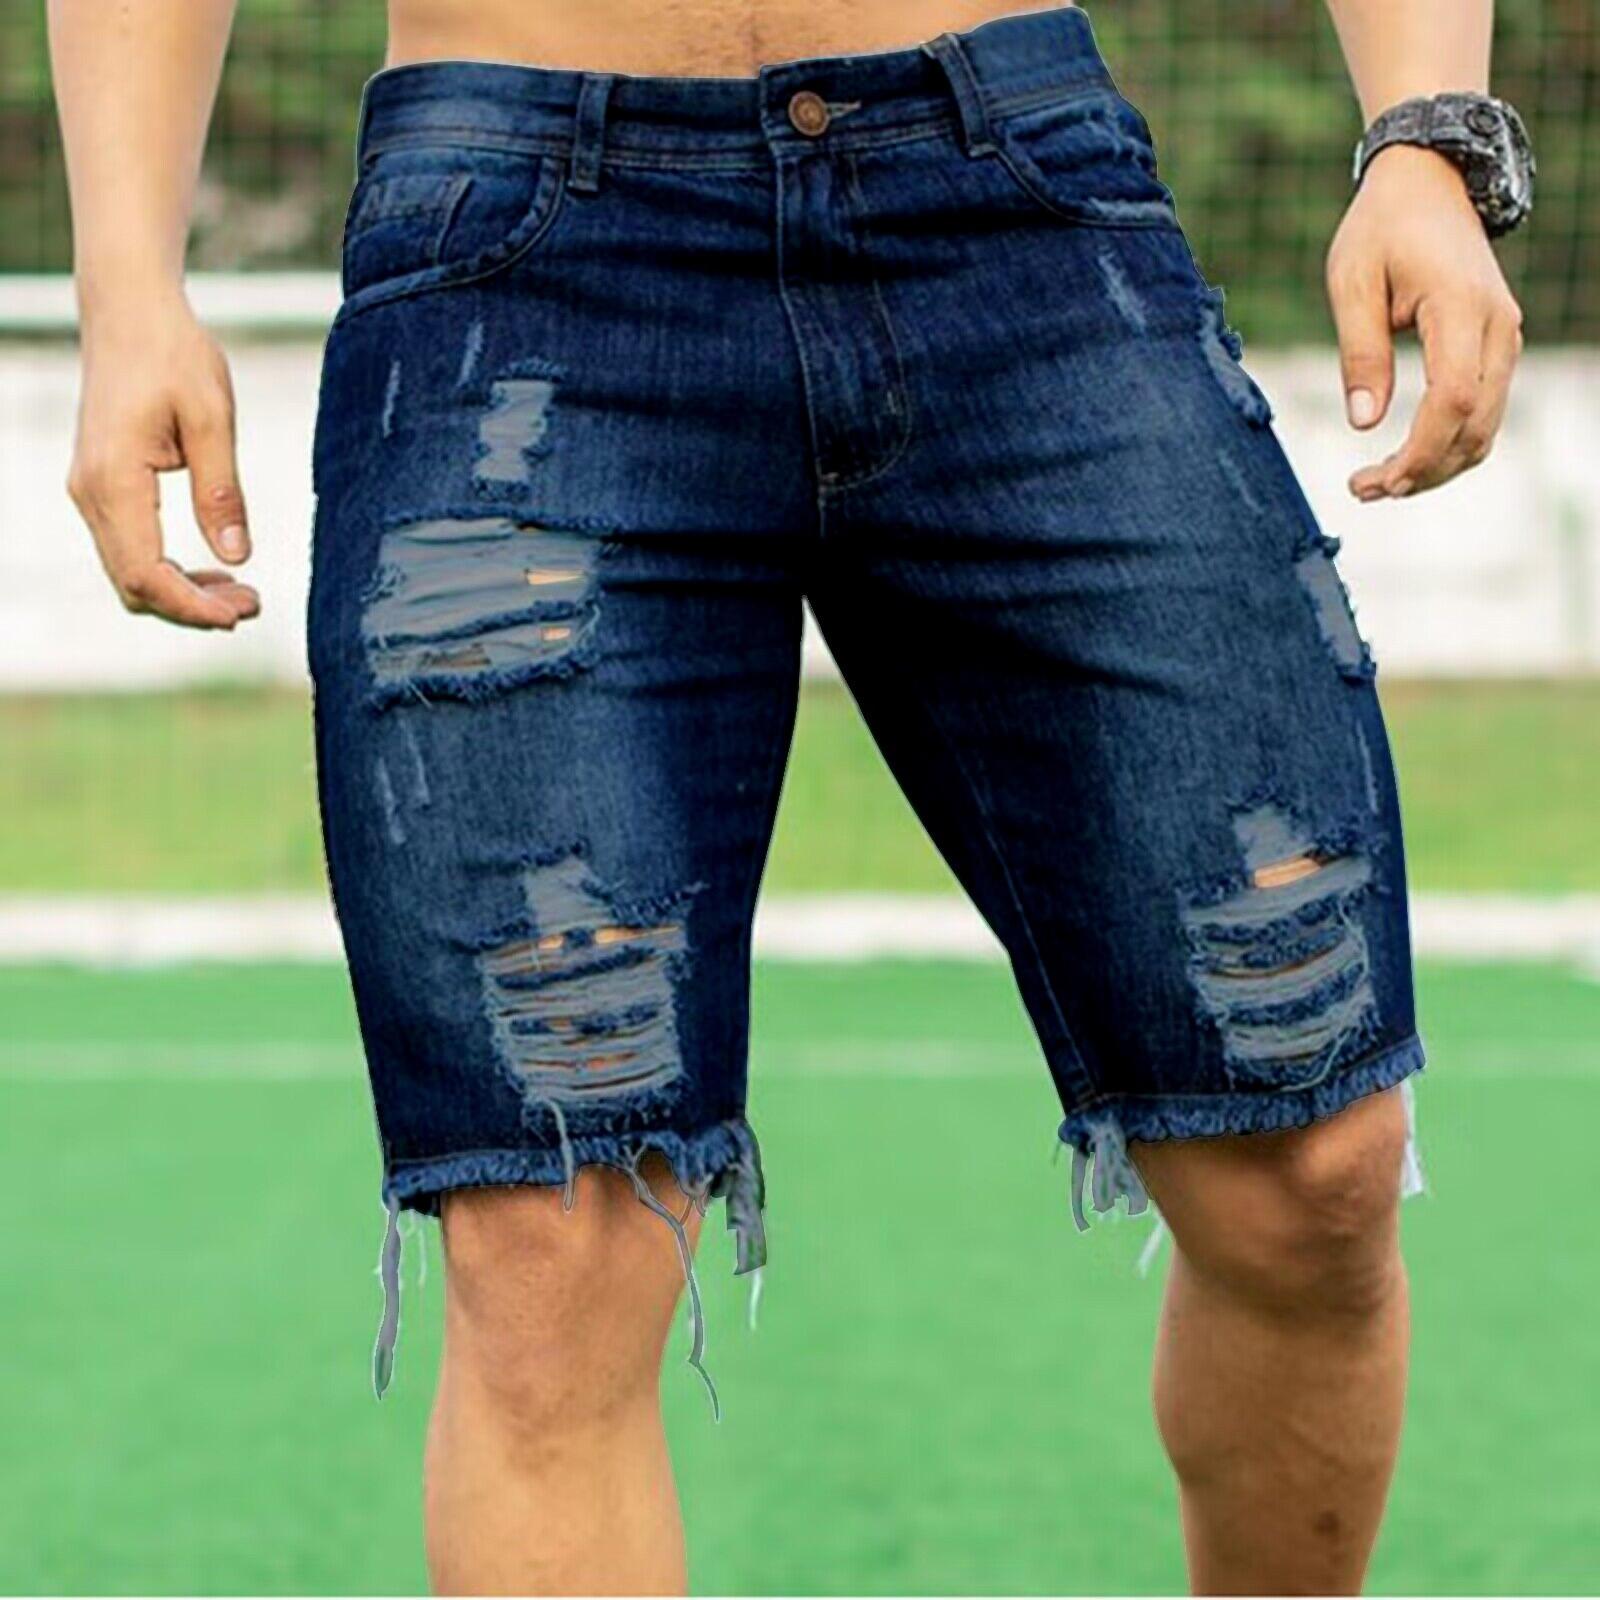 Wnzdswn Jeansshorts voor heren Gescheurd Distressed Denim Shorts met gebroken gat Distressed Stretchy Jeans Gescheurd